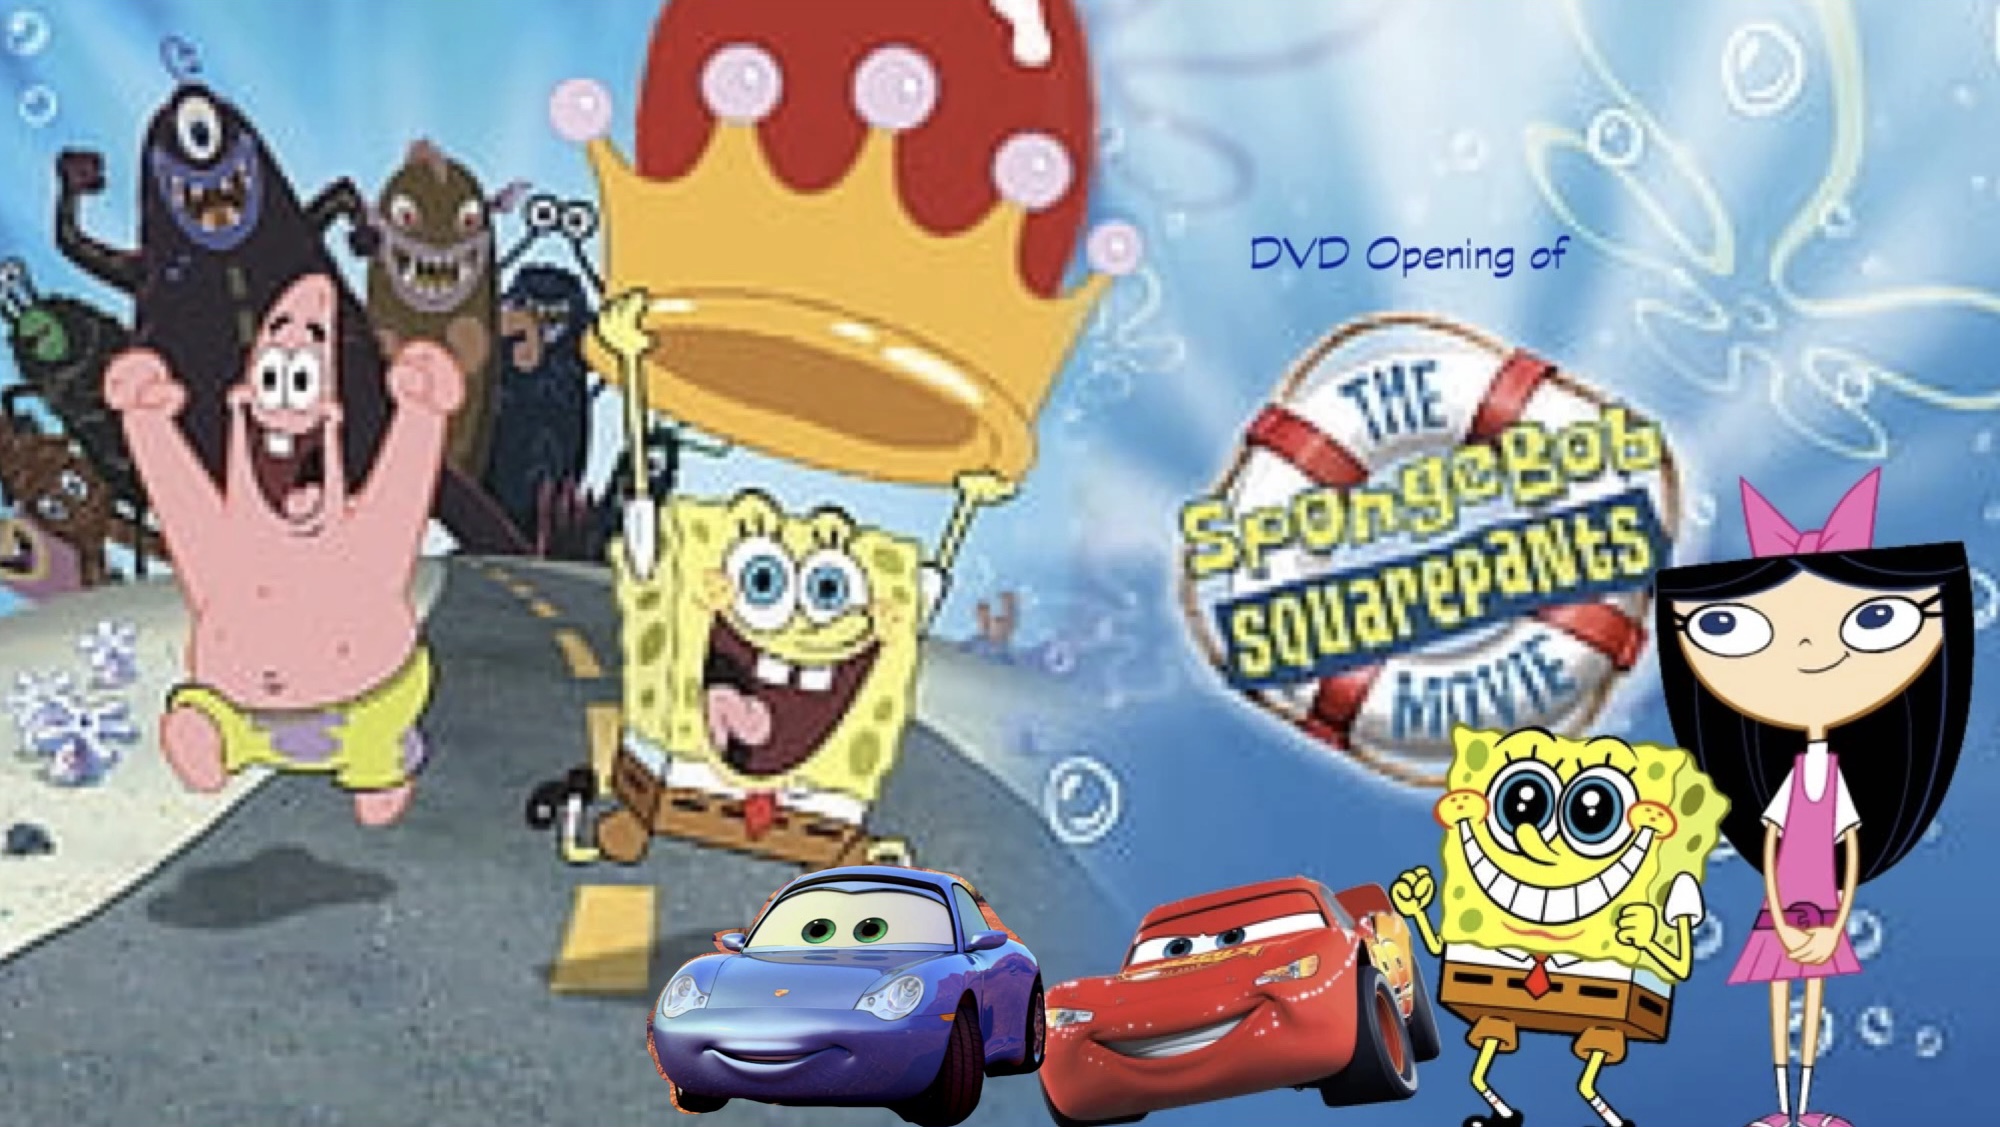 DVD opening of The SpongeBob SquarePants Movie | Alec the Videomaker Wiki |  Fandom